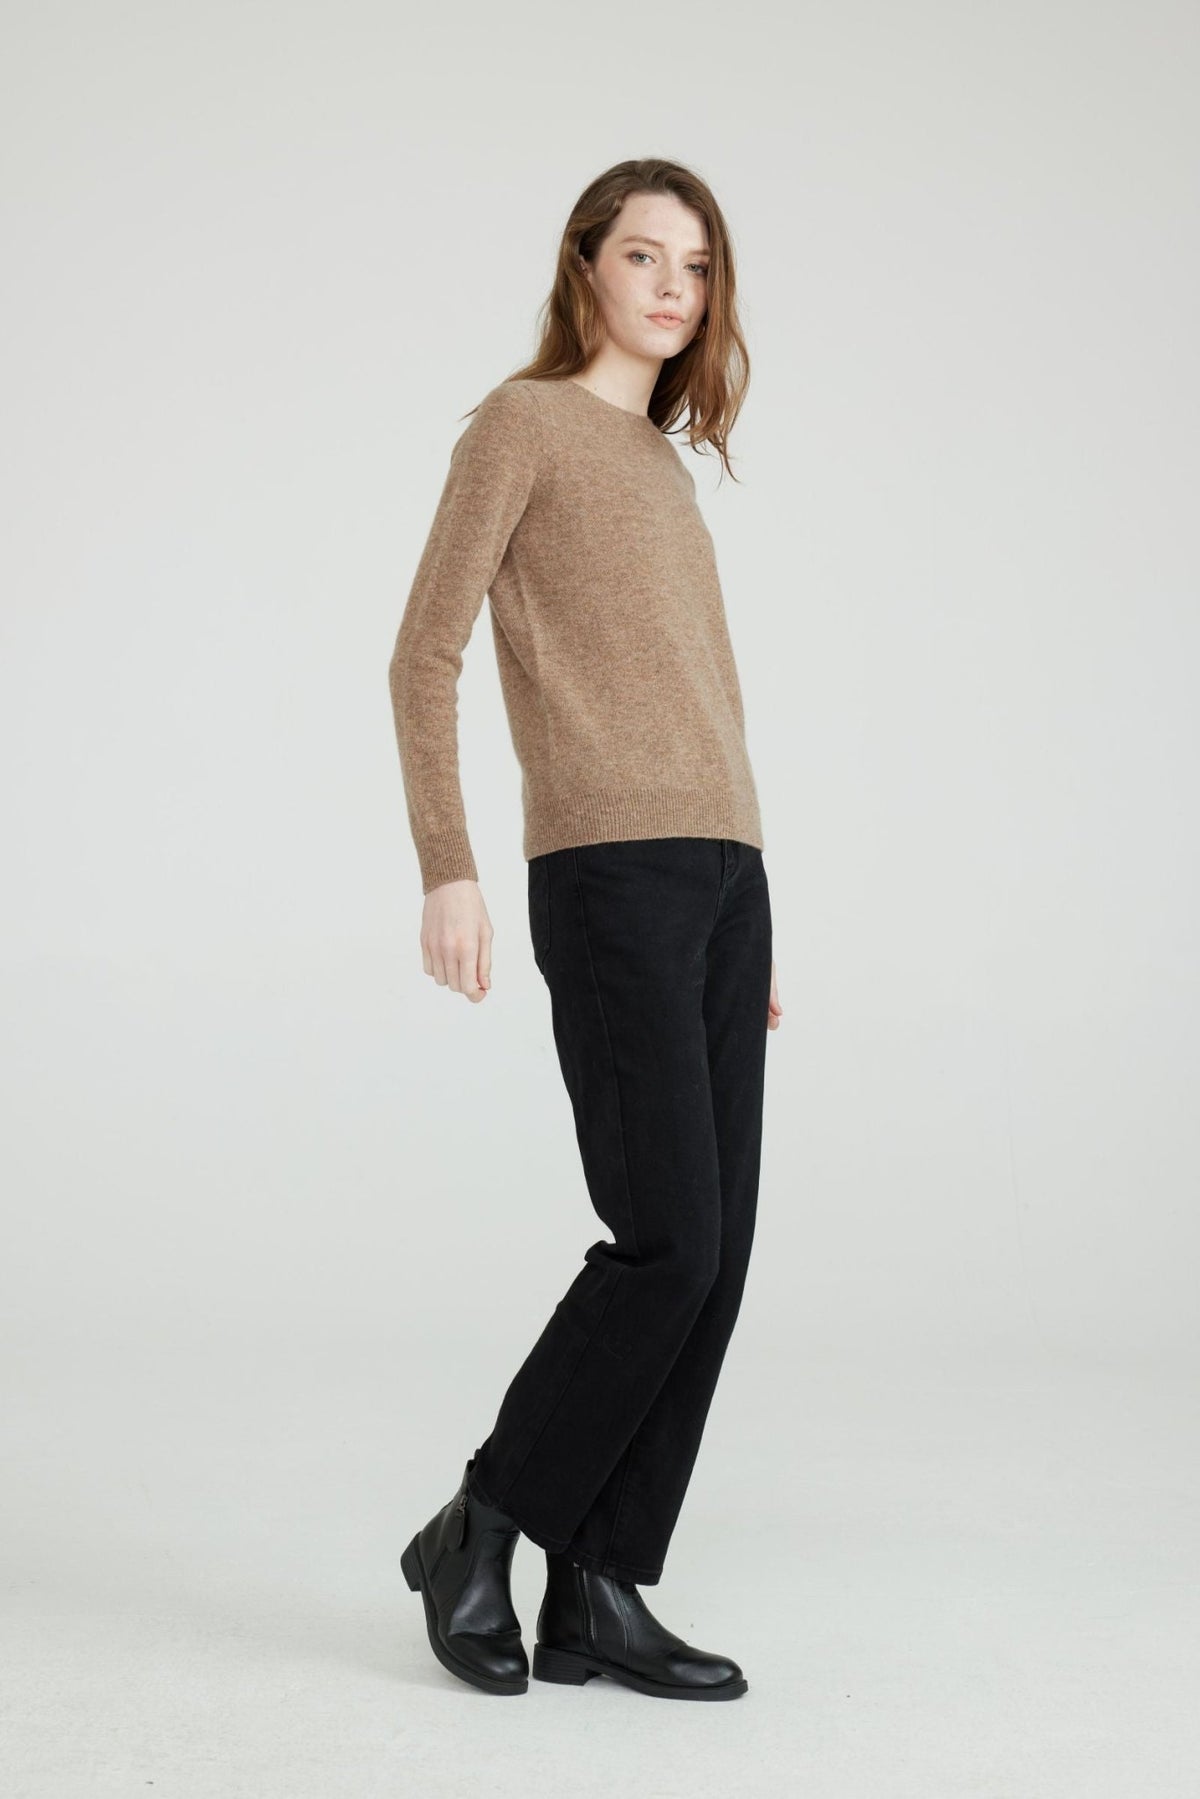 Fiona 100% Merino Wool Crewneck Sweater - Whisper Mint